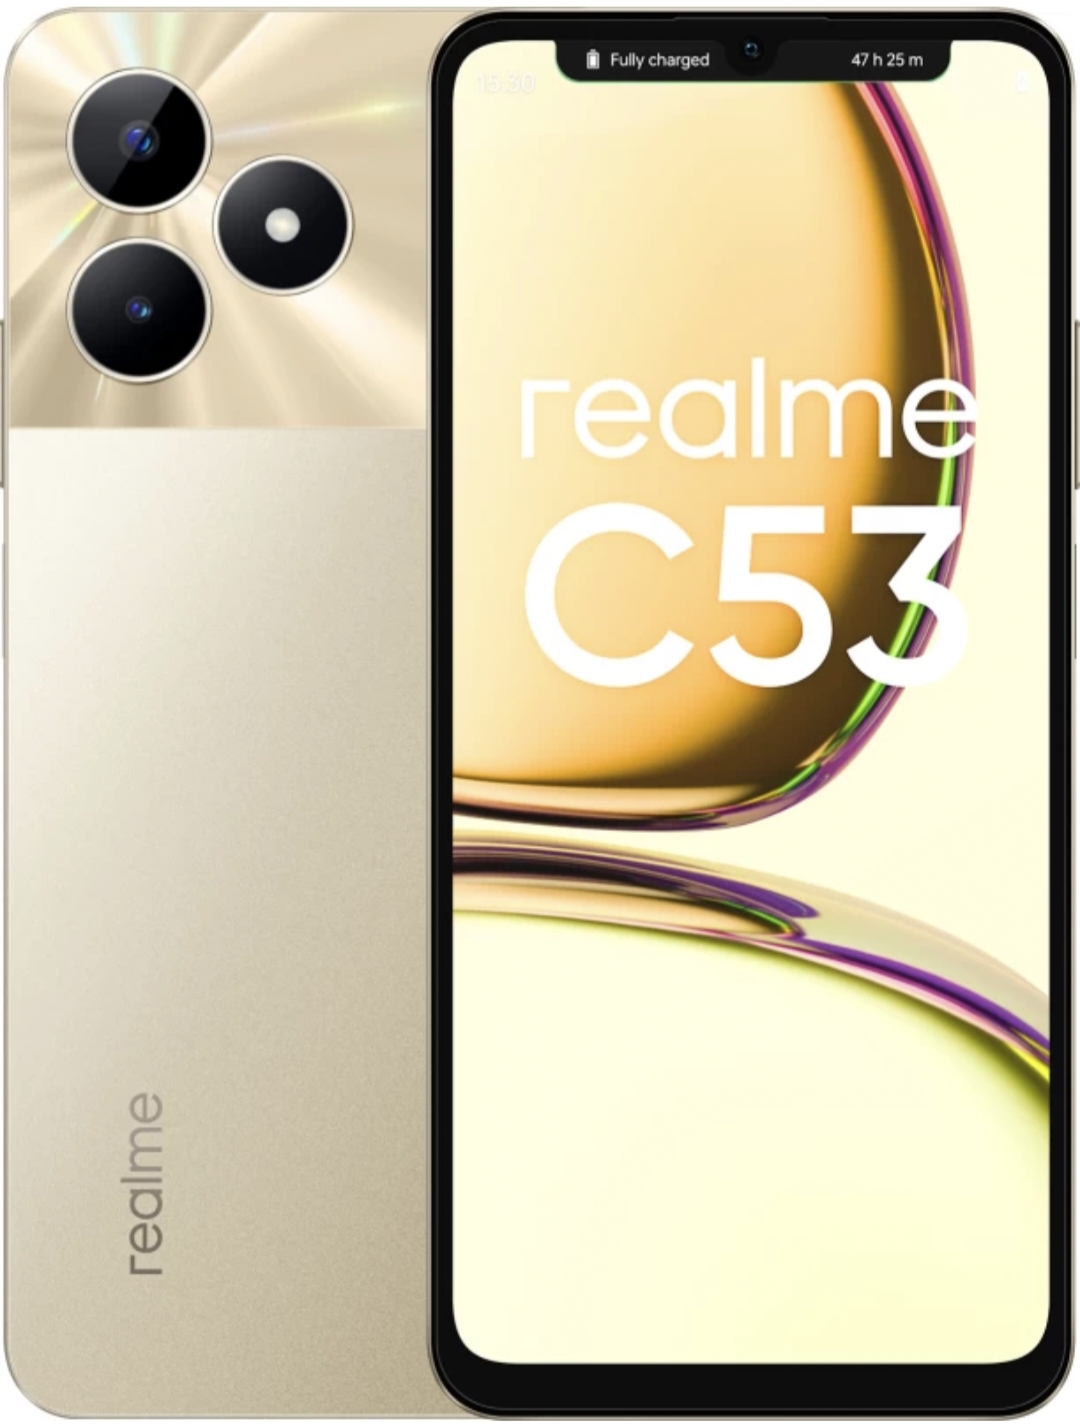 Realme C53 4GB Price is India Flipkart